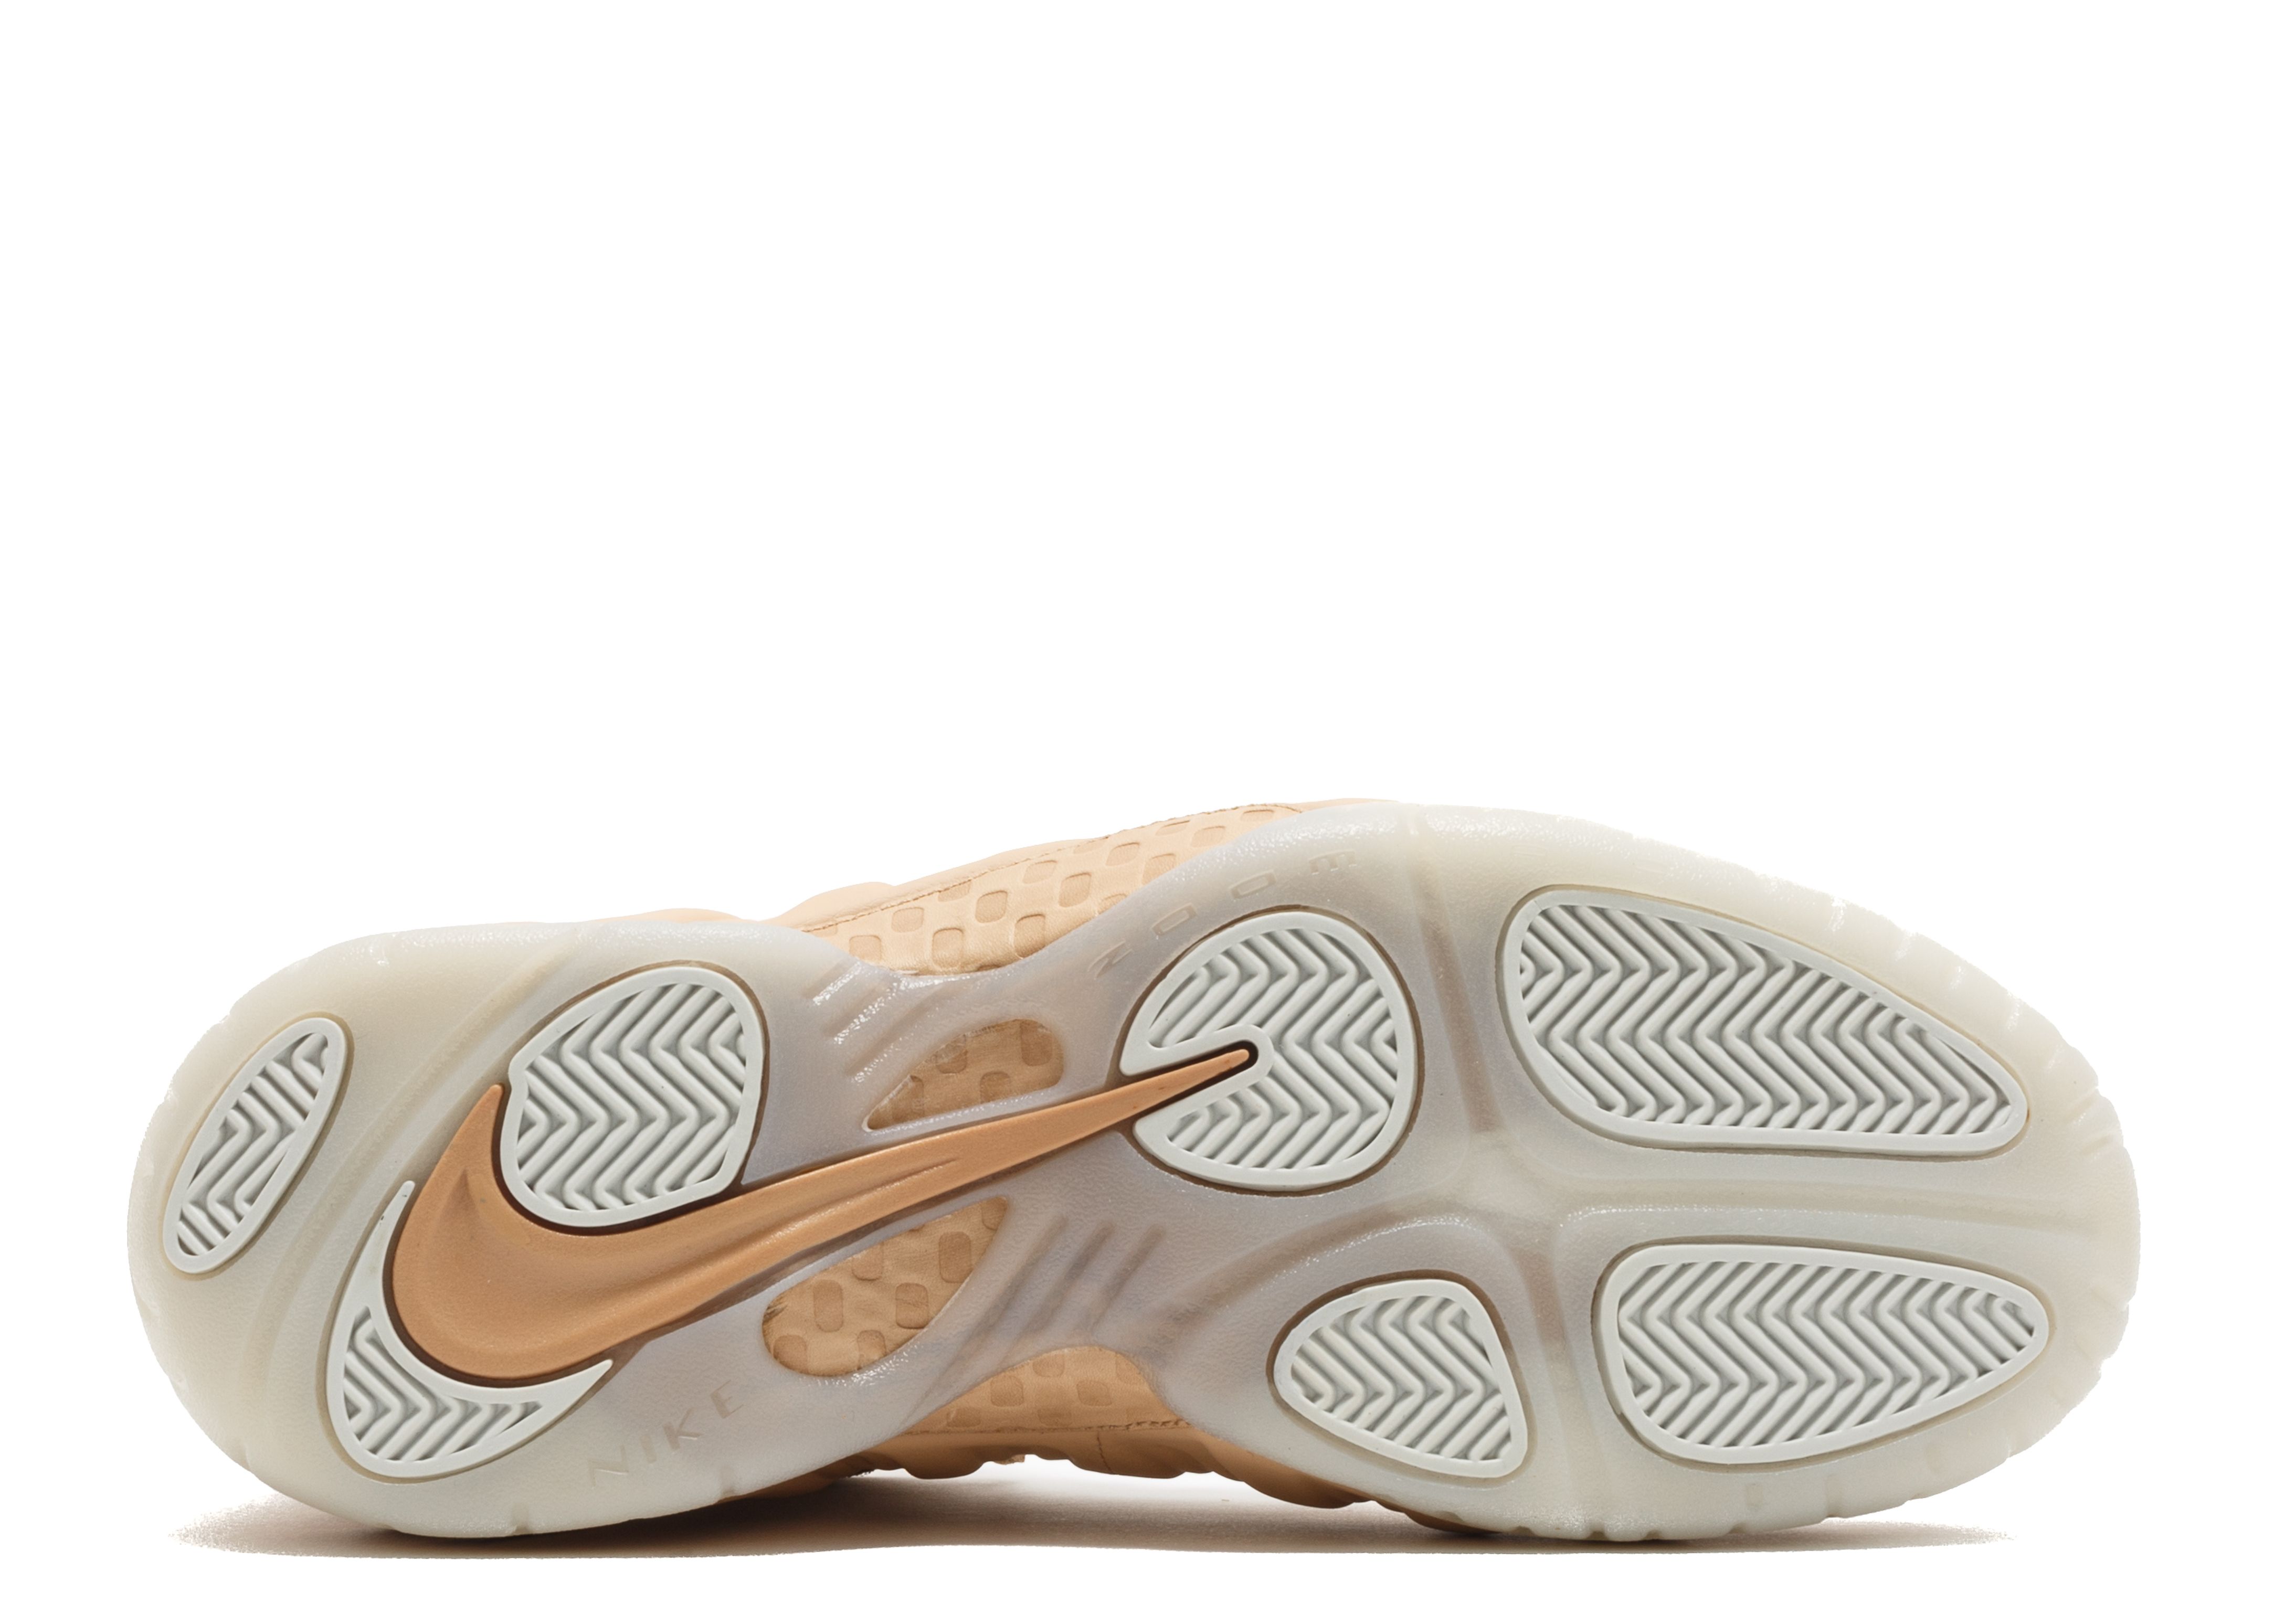 Nike Air Foamposite Pro 'Vachetta Tan & Rose Gold'. Nike SNKRS GB